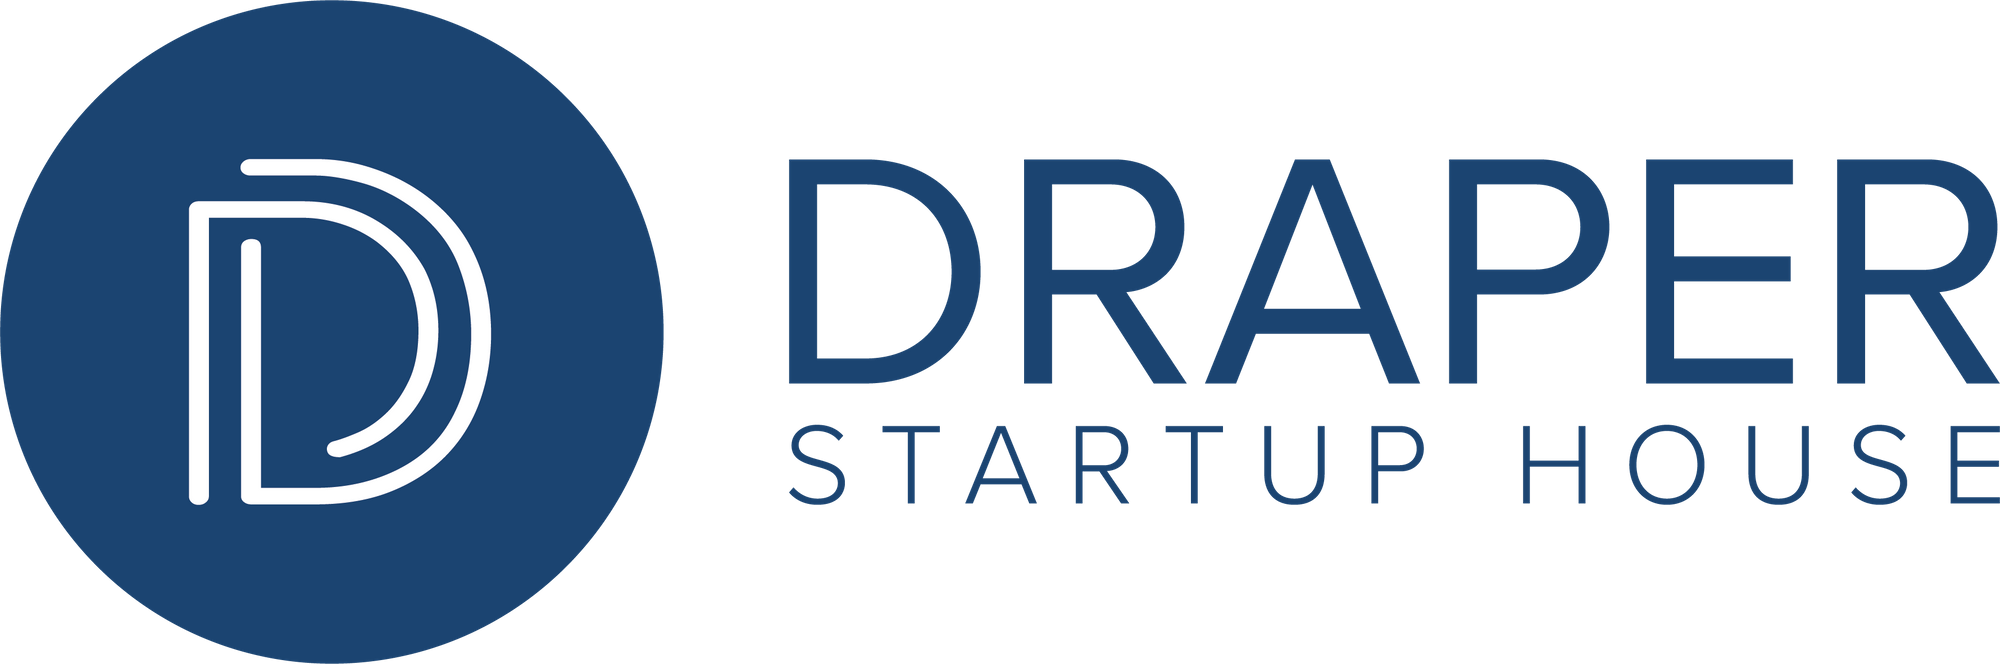 Draper_logo